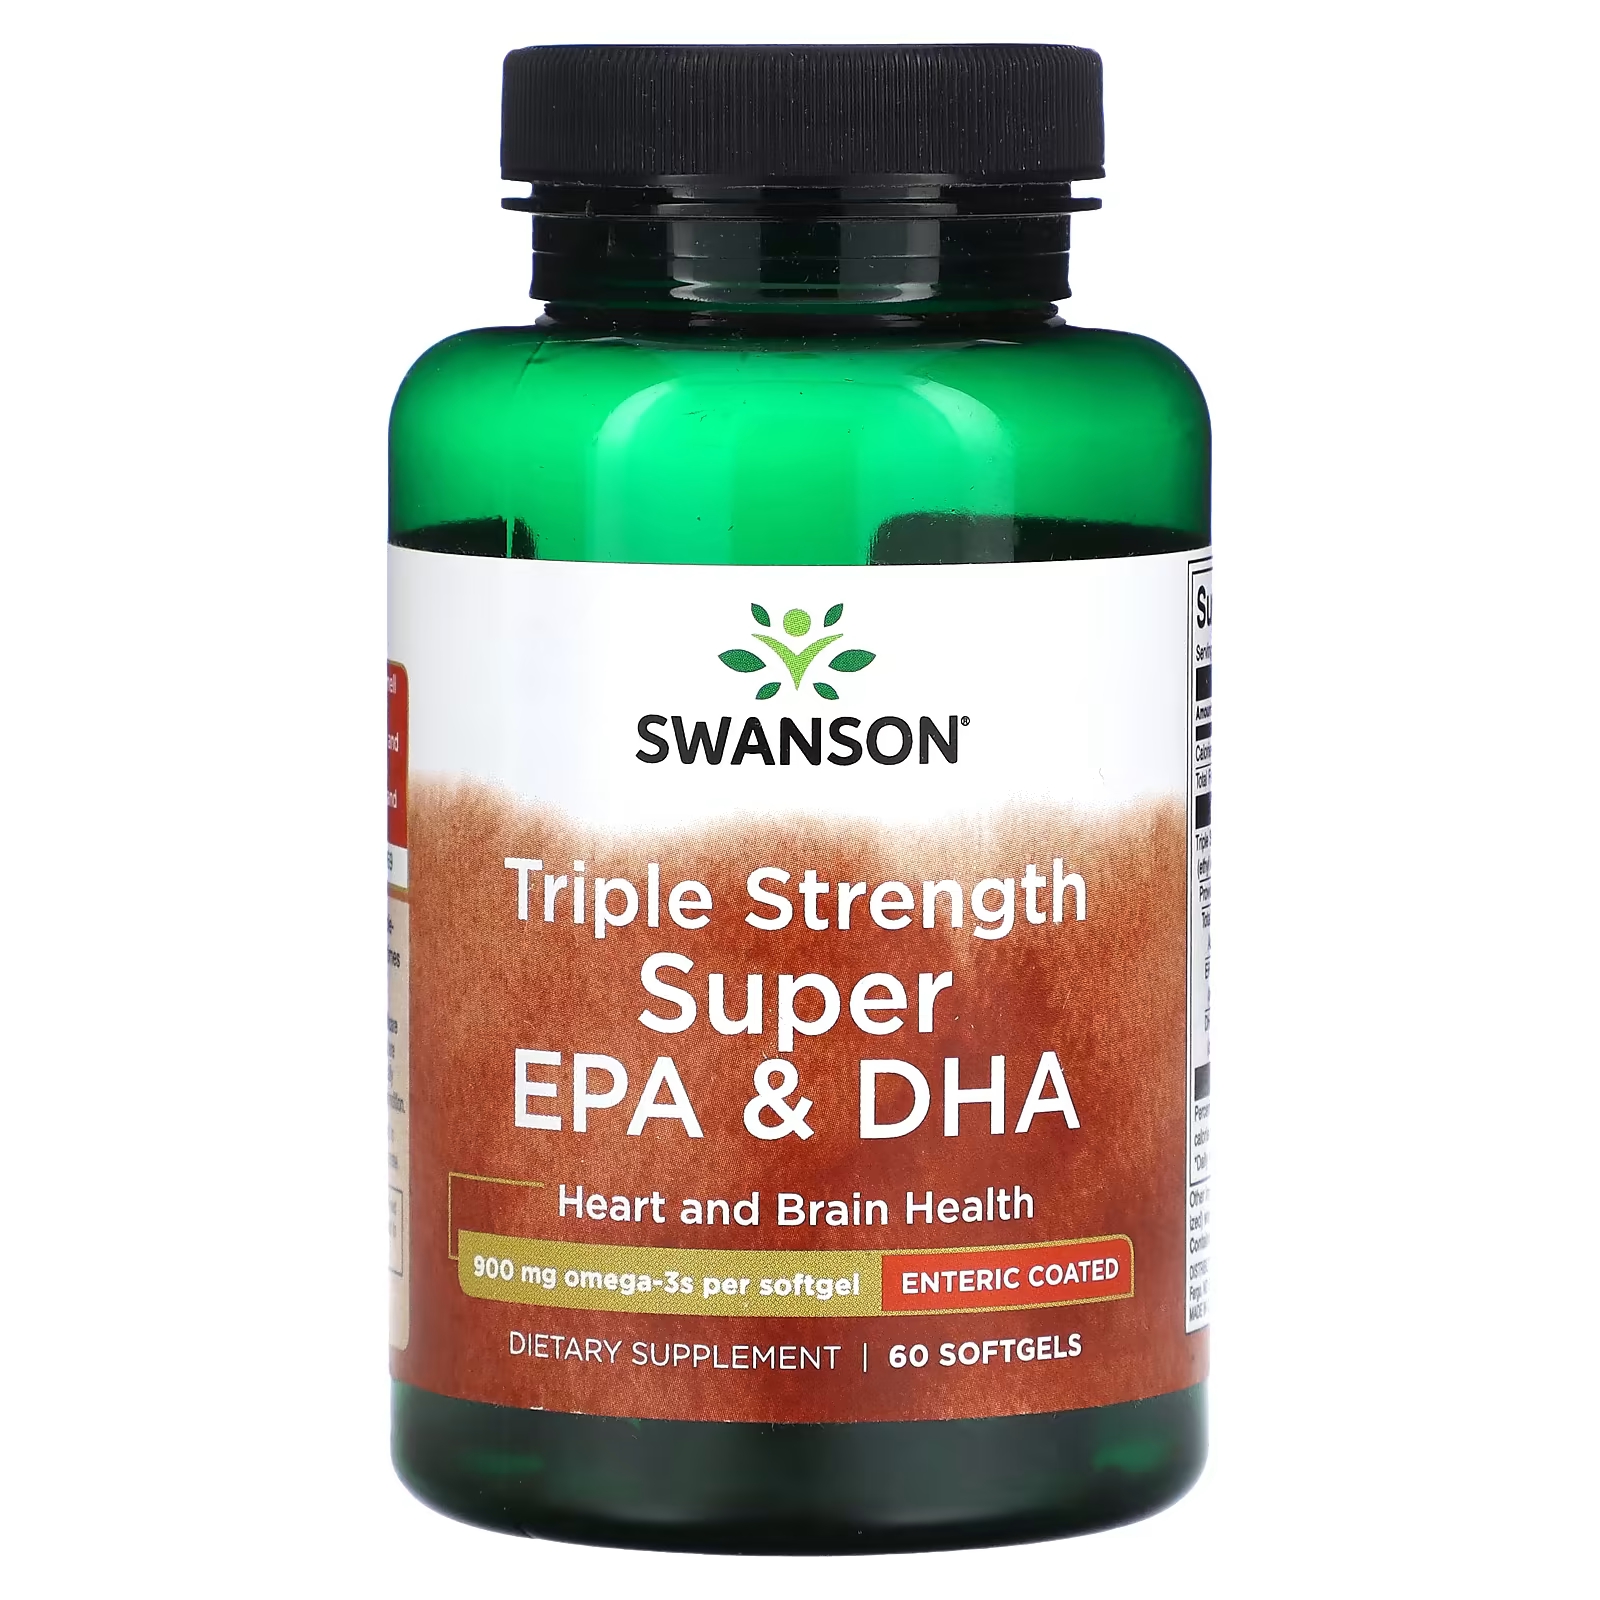 Пищевая добавка Swanson Triple Strength Super EPA и DHA 900 мг, 60 мягких таблеток комплекс bonalin epa dha 60 мягких таблеток soria natural